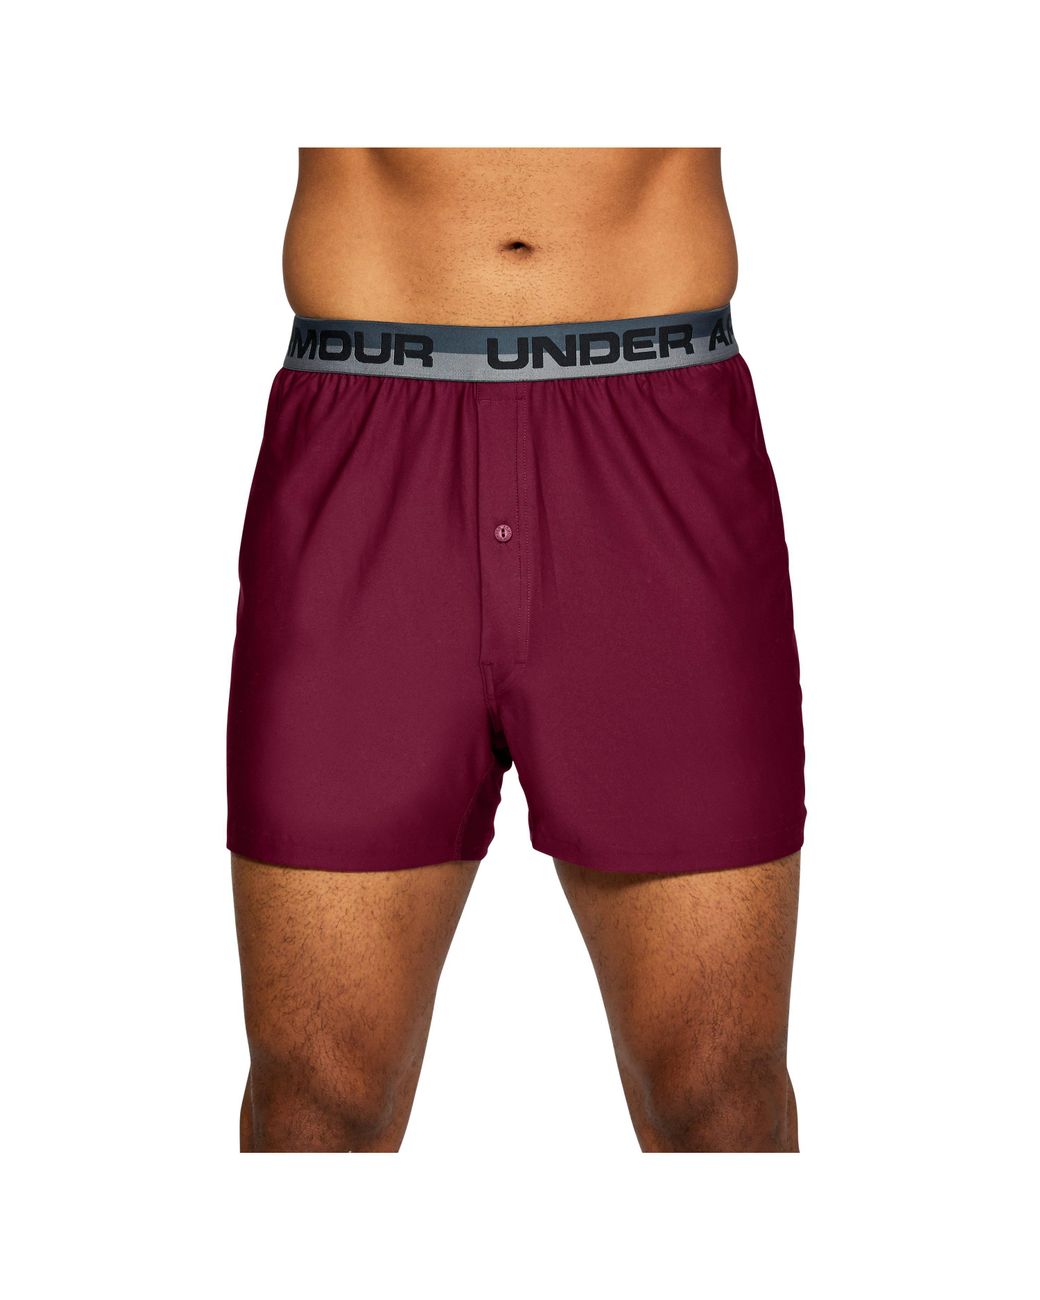 Under Armour Men's Ua Original Series Boxer Shorts for Men